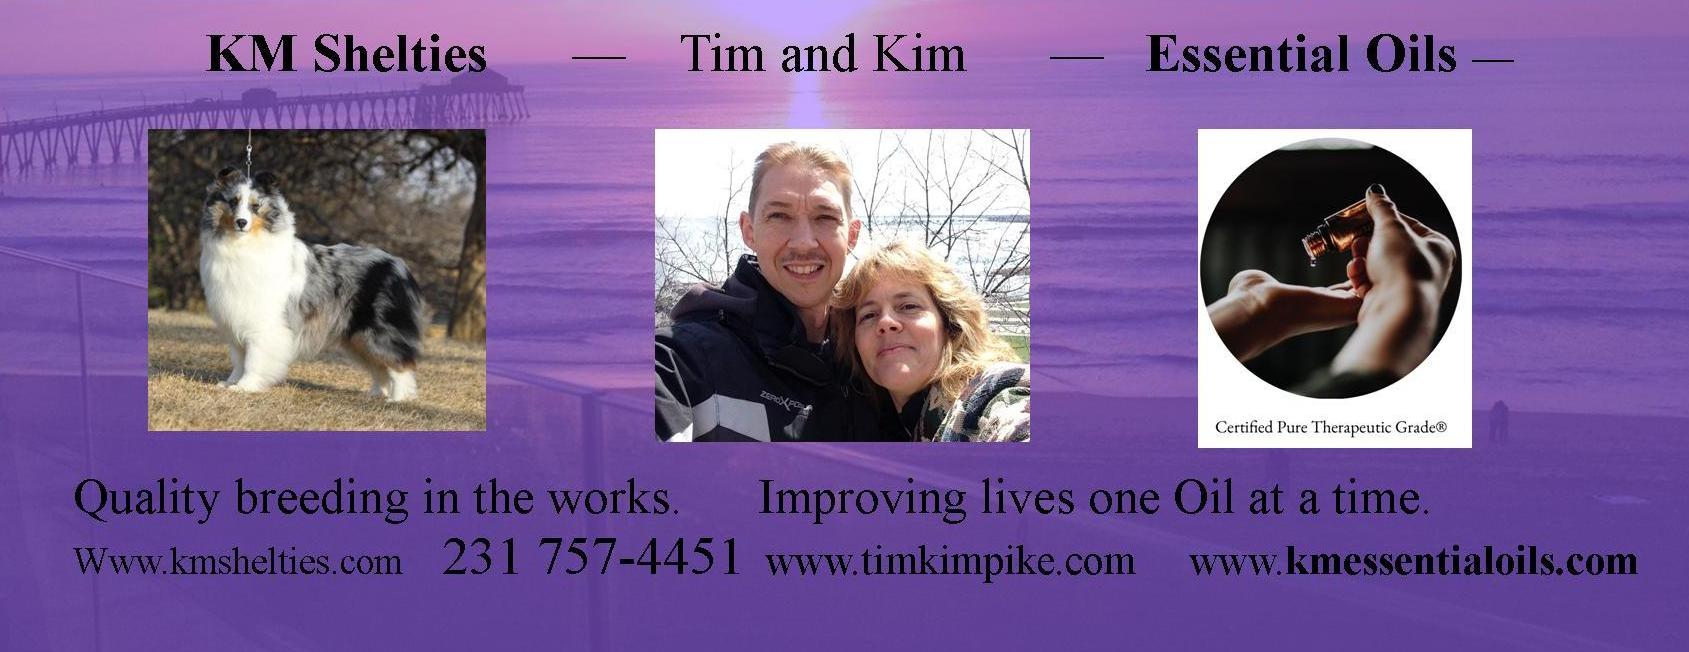 Tim and Kim KM essential Oils Herbs blend Wellness health coaches